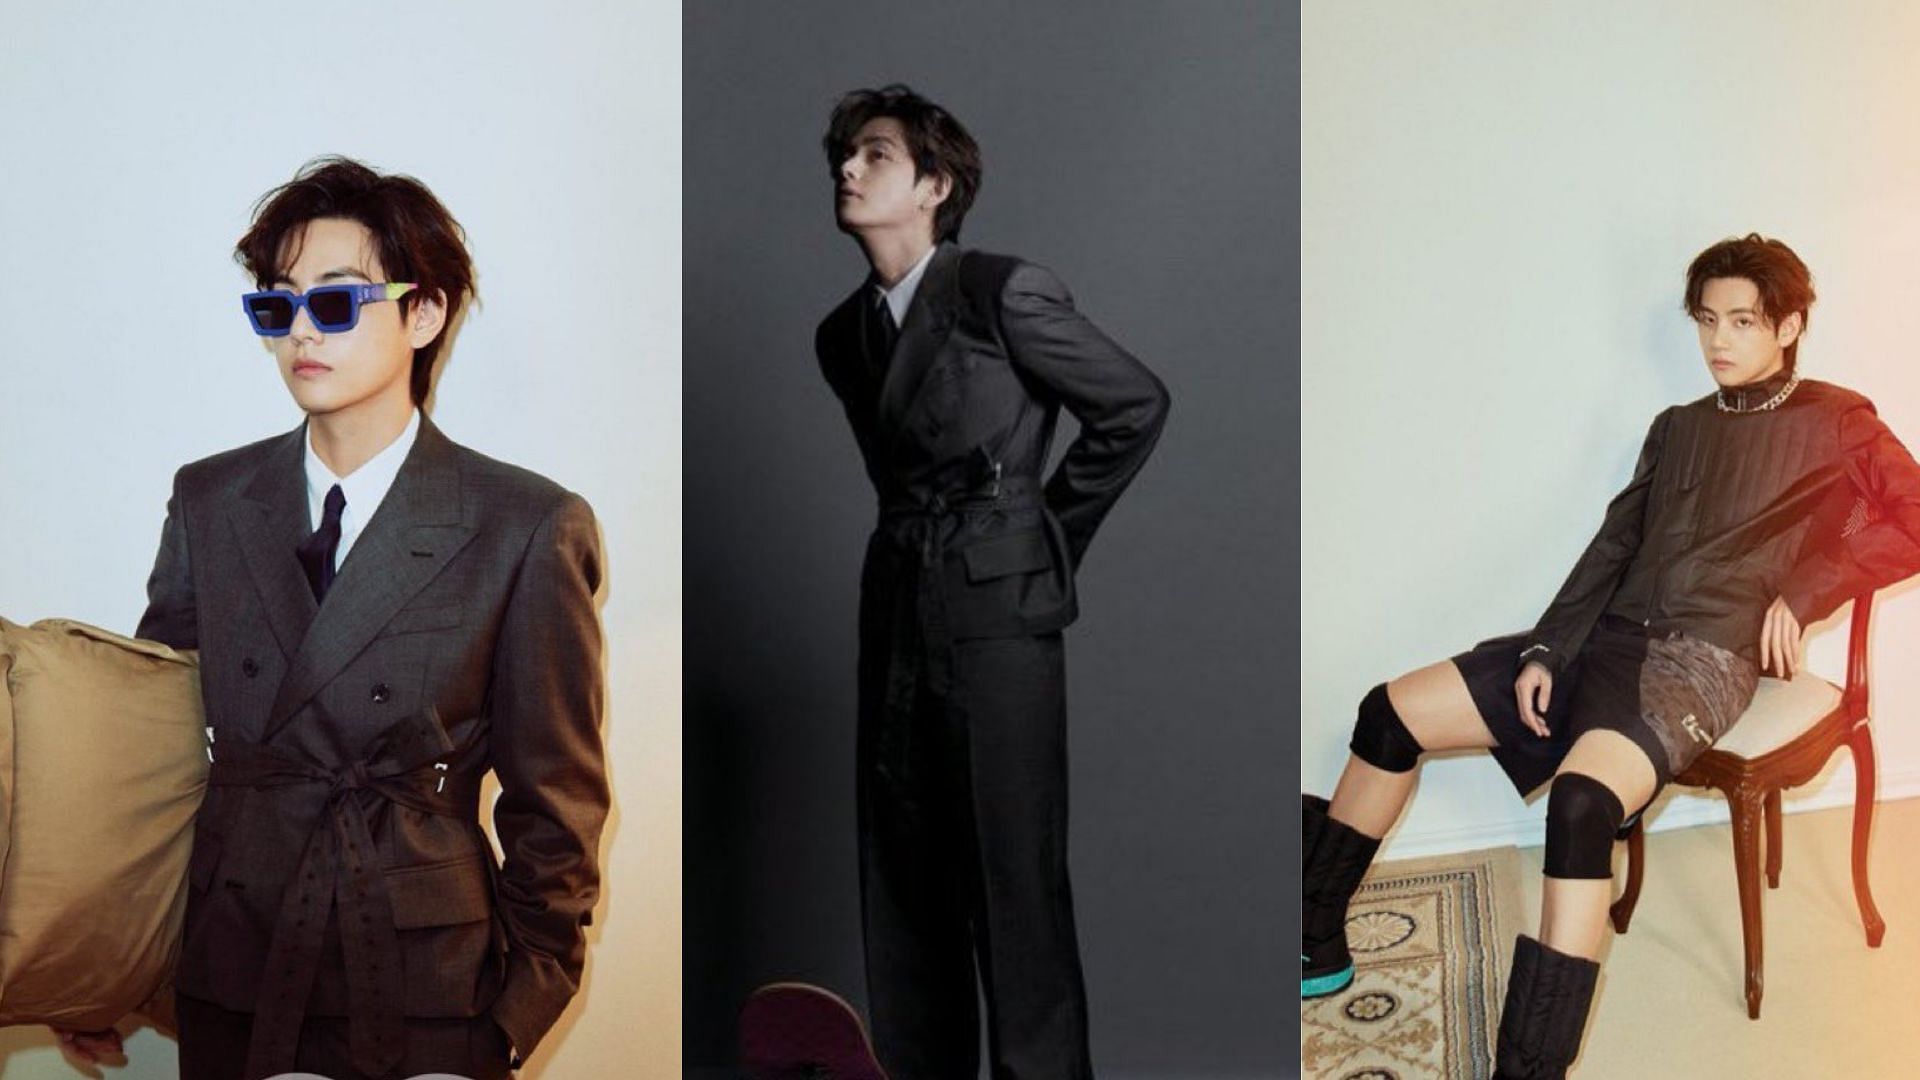 BTS Exudes Classy Visuals on Covers of GQ Korea and Vogue Korea